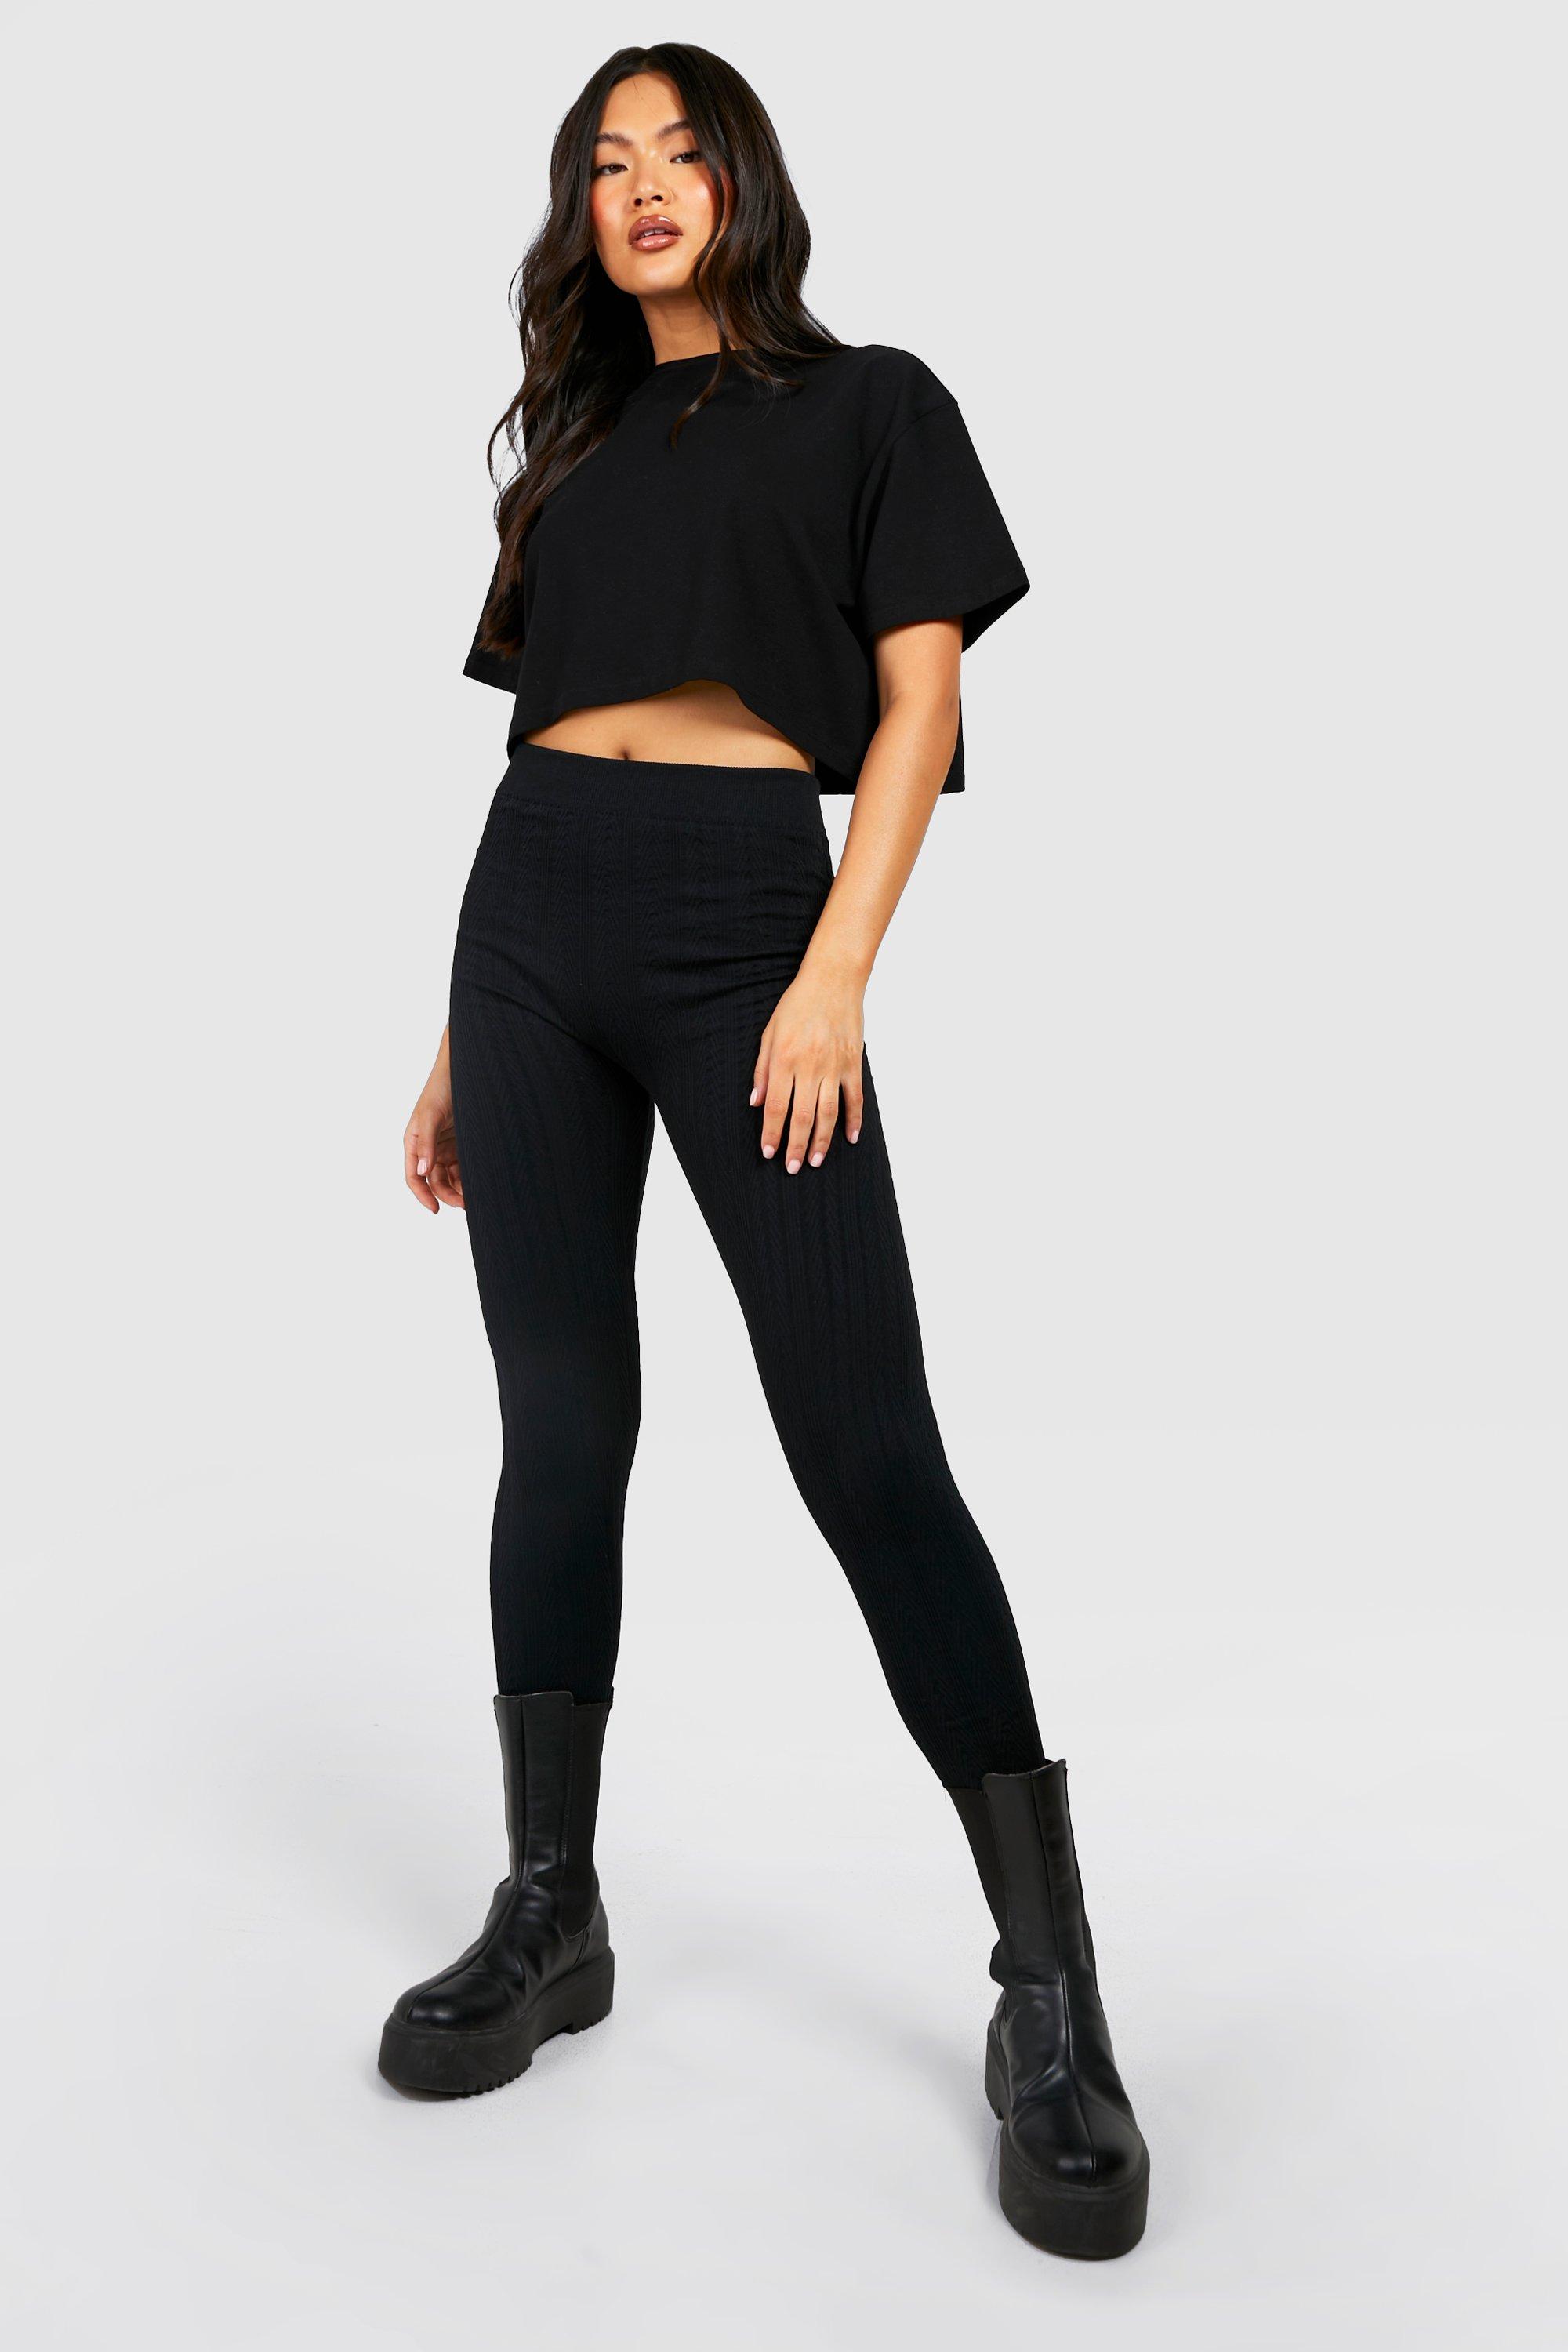 Black seamless women's leggings in ribbed fabric Dim Icon Seamless